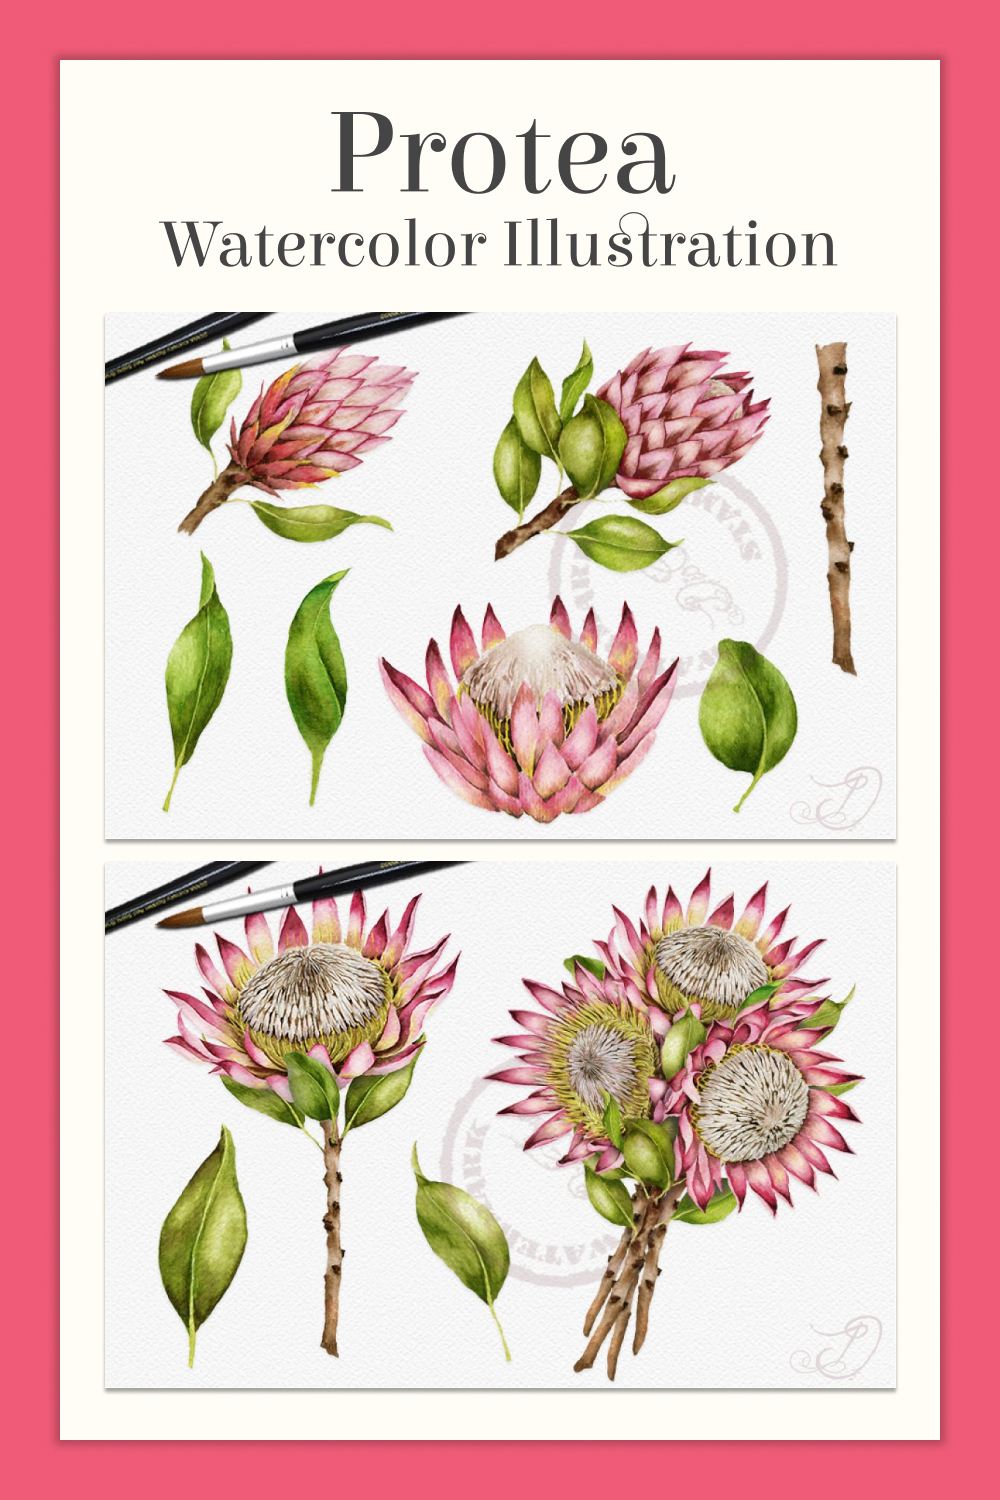 Protea watercolor illustration of pinterest.